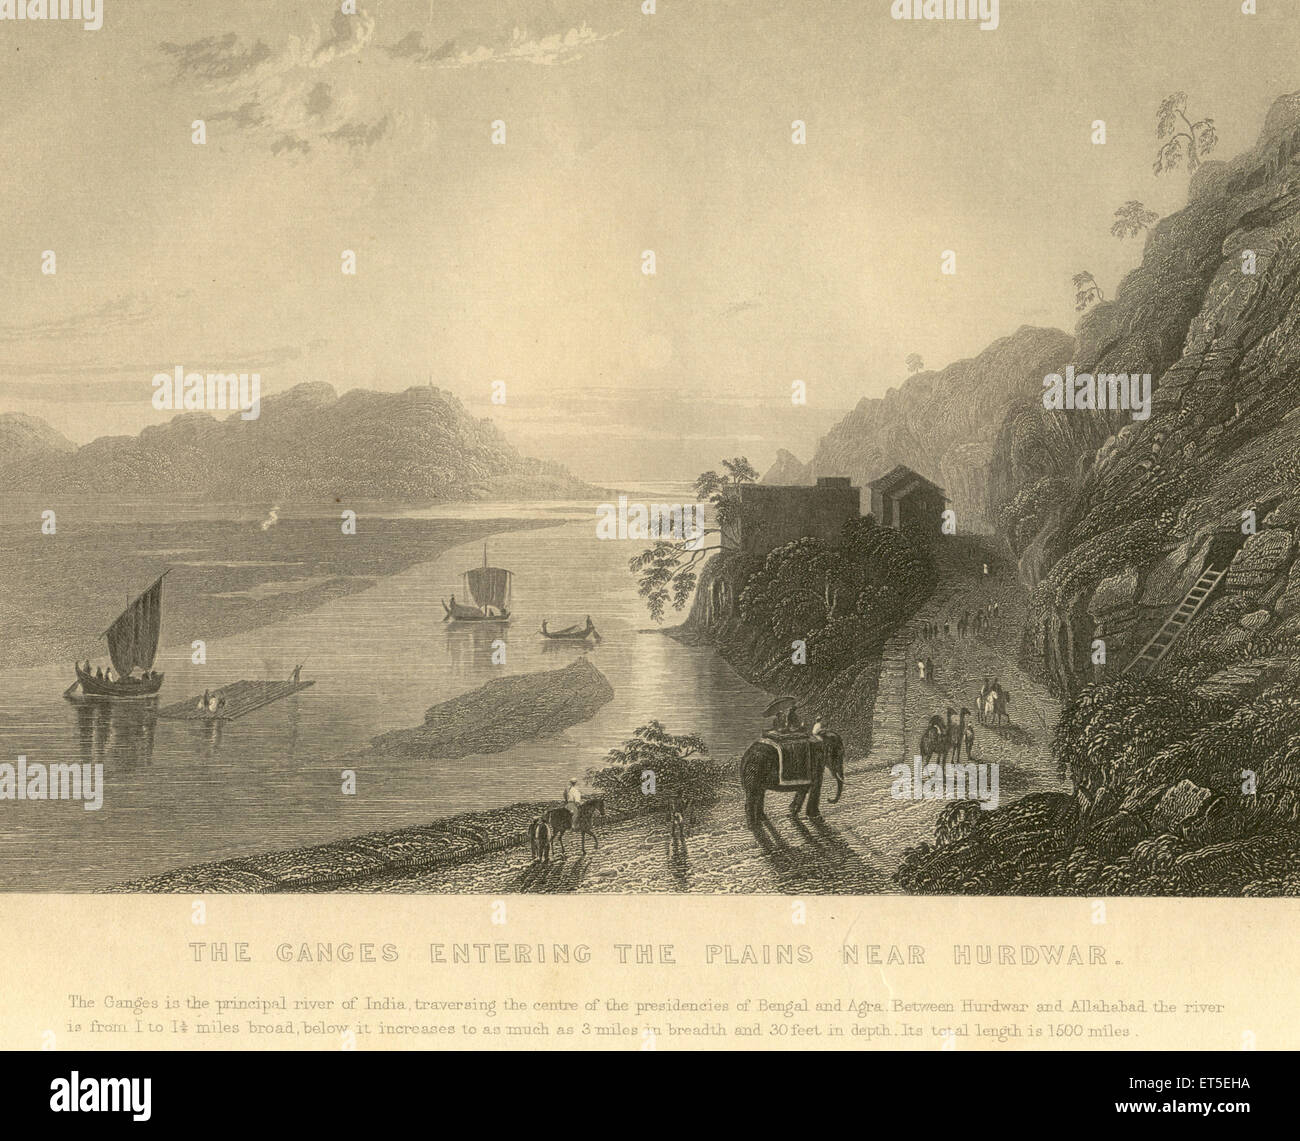 Ganga, Hurdwar, Haridwar, Uttarancal, Uttarakhand, Inde, rébellion indienne, vues mutineuses, muminisme de Sepoy, image ancienne de 1800s Banque D'Images